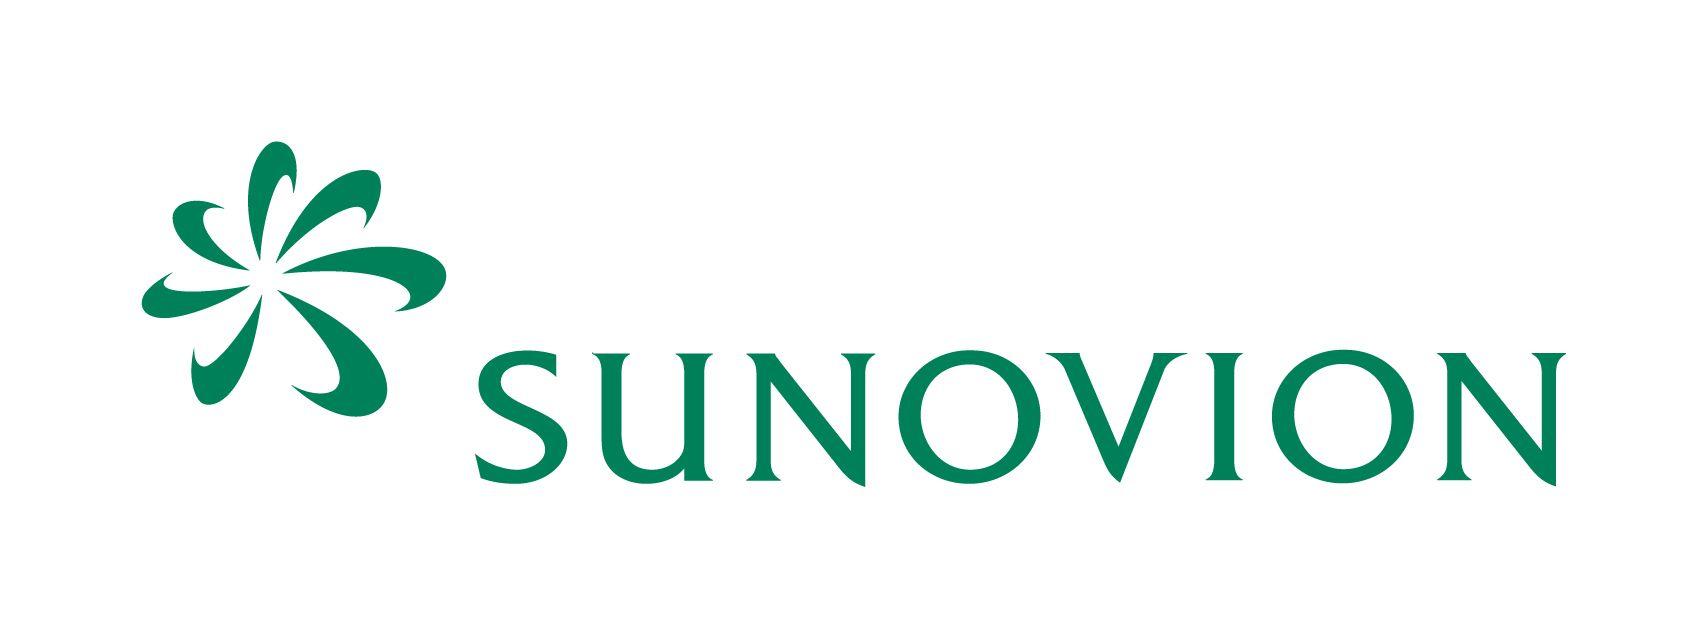 Sunovion Logo - The American College of Chest Physicians and Sunovion Announce ...